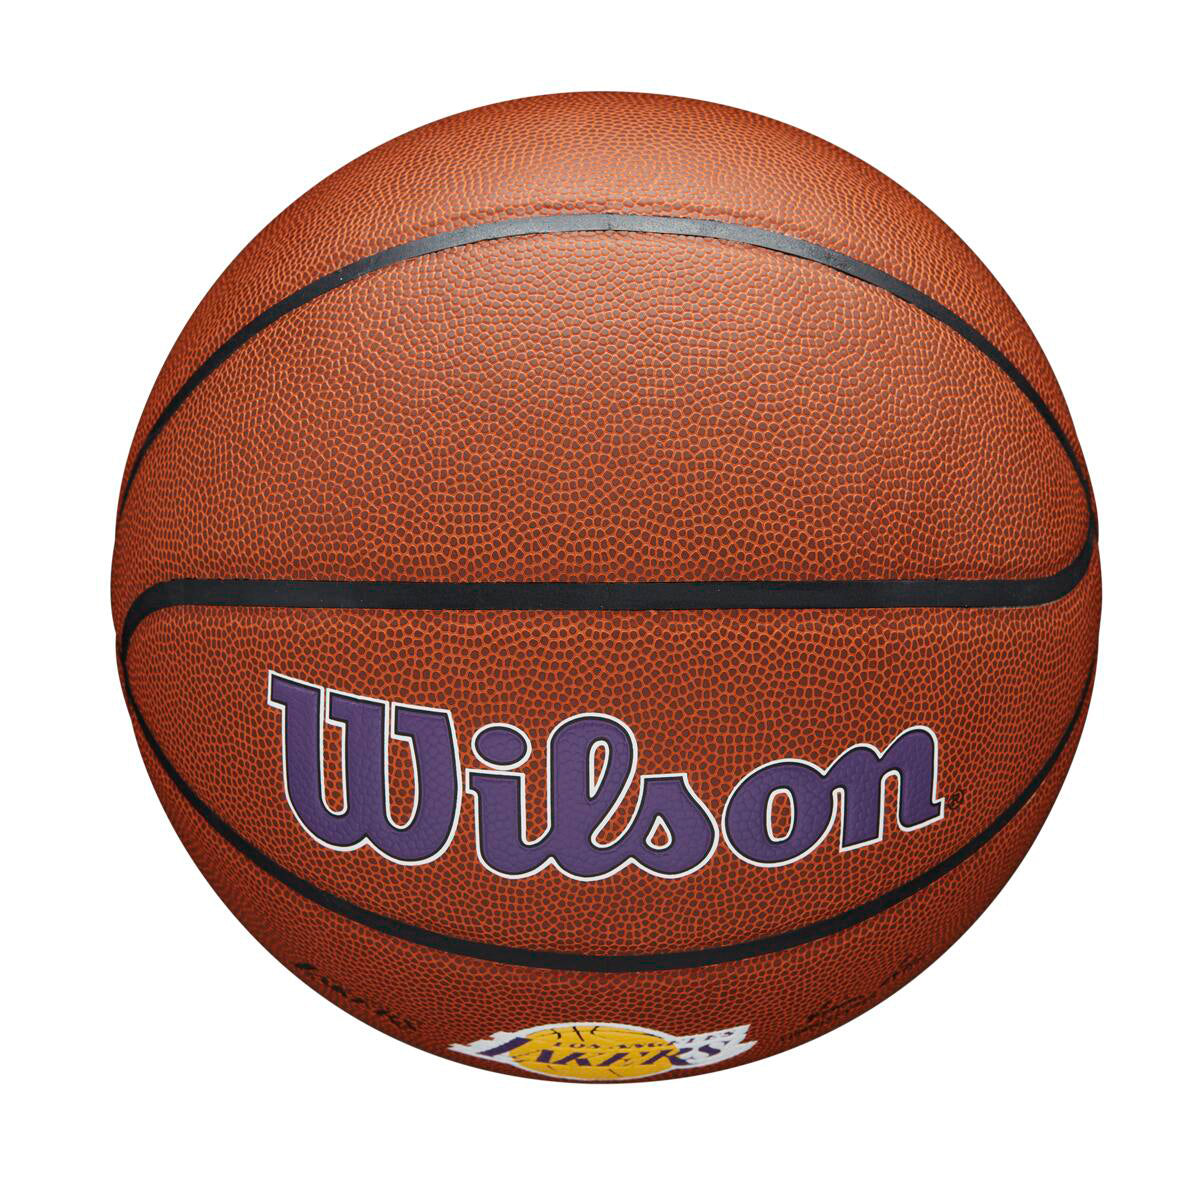 Wilson NBA Composite La Lakers 7 Brown